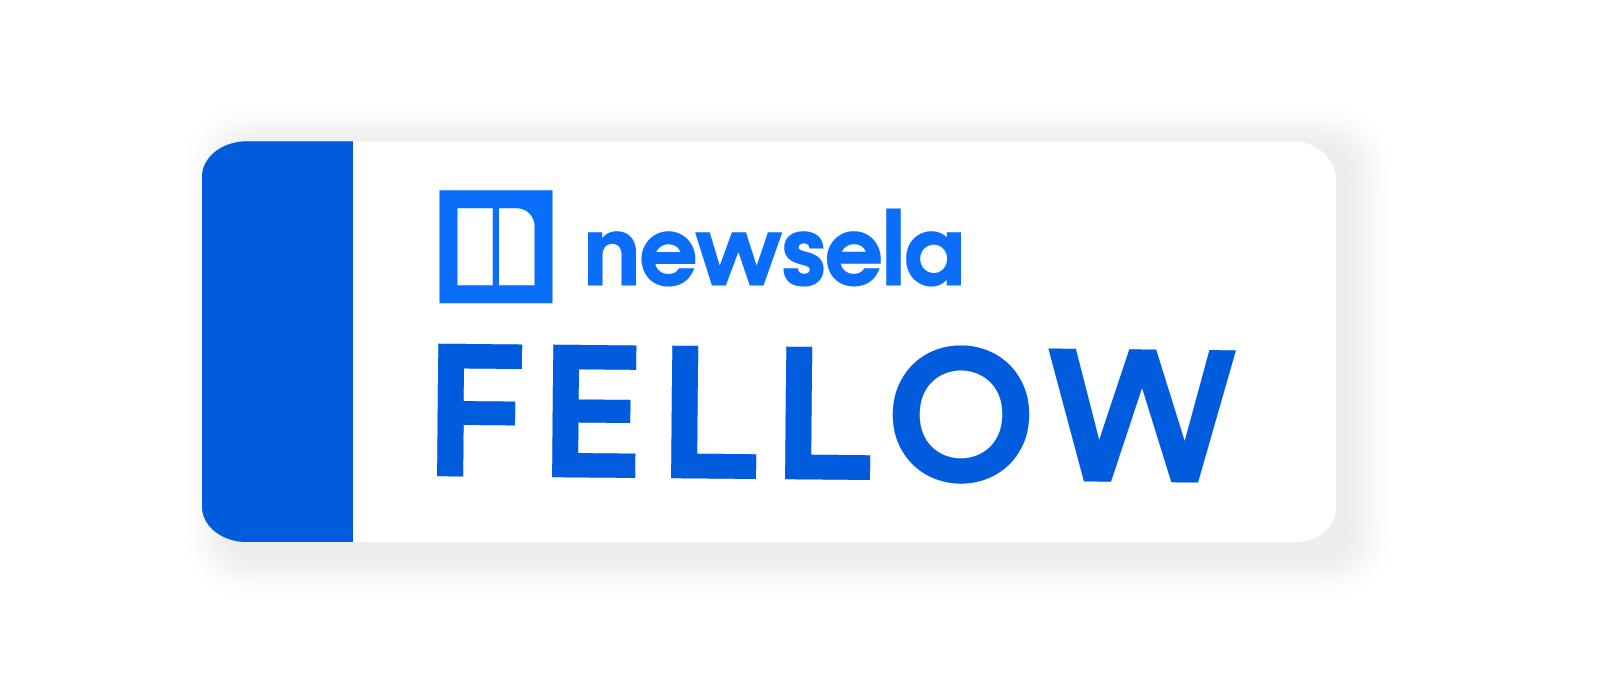 Newsela Fellow